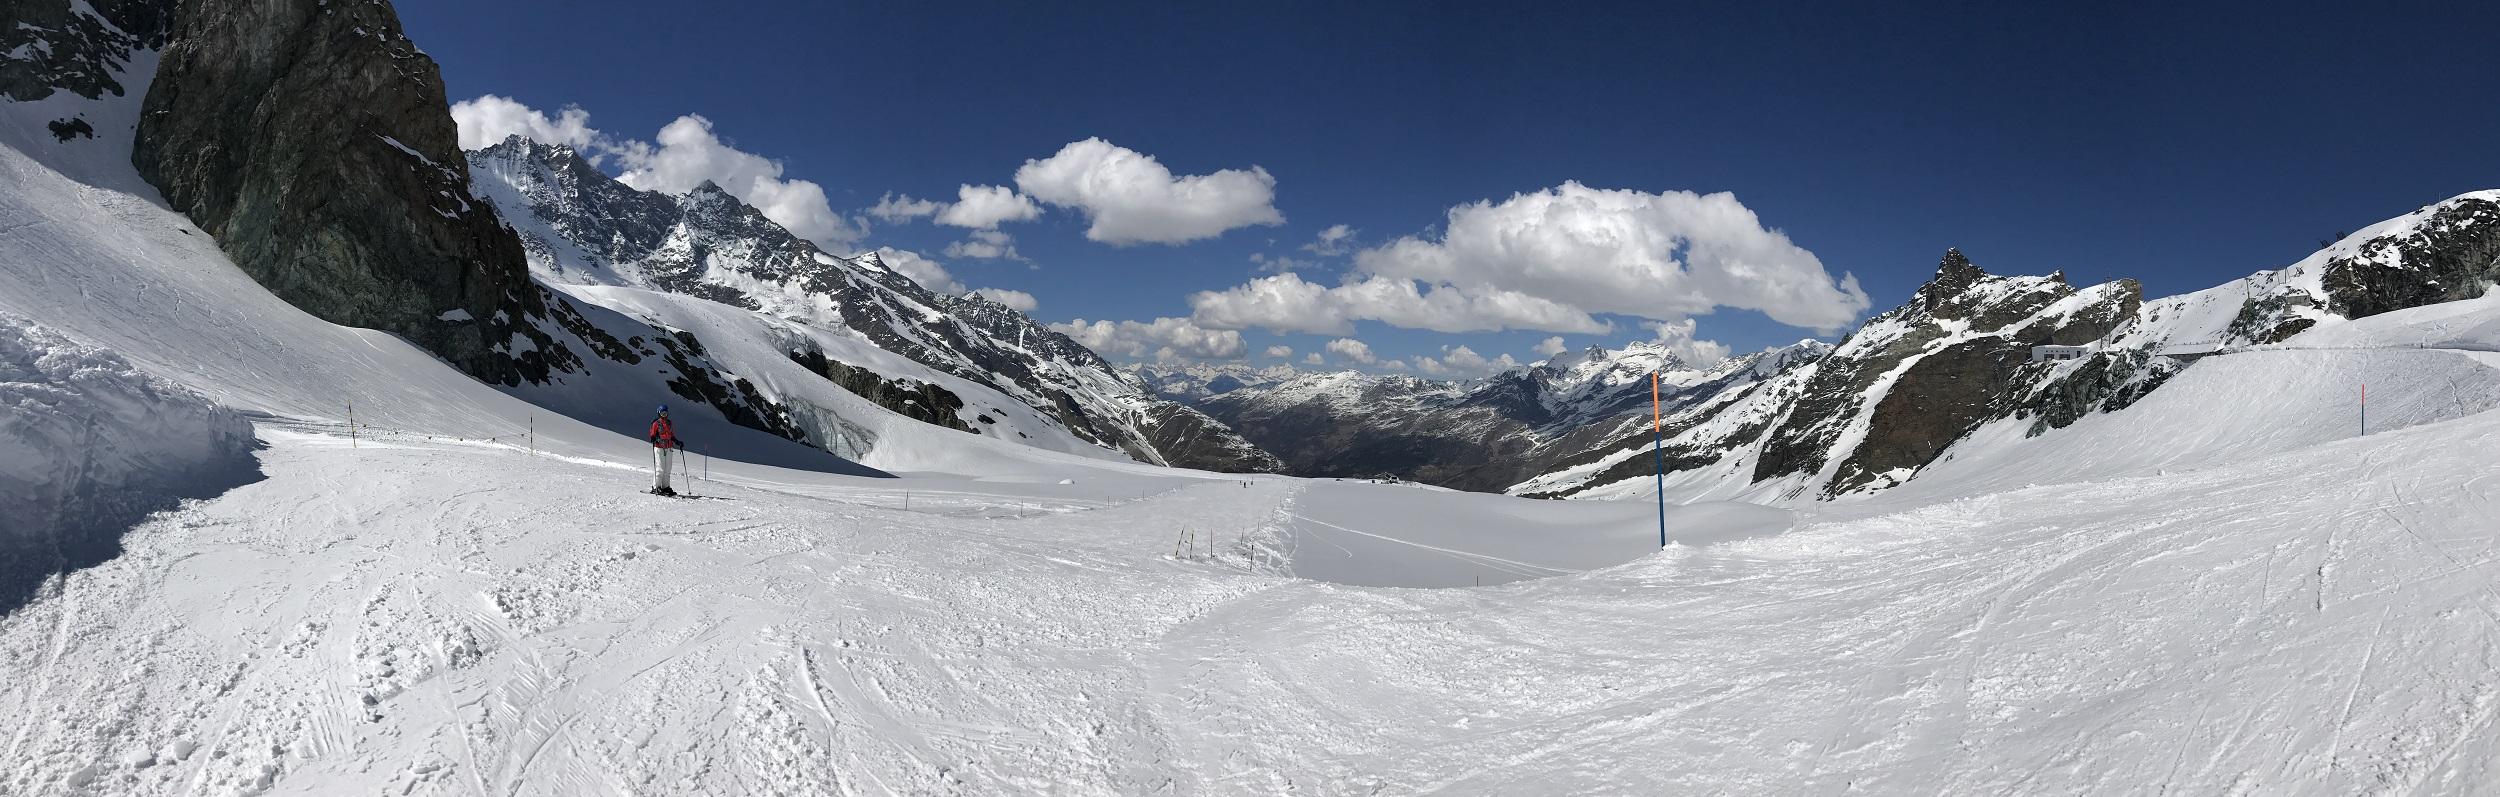 suisse-saas-fee-station de ski